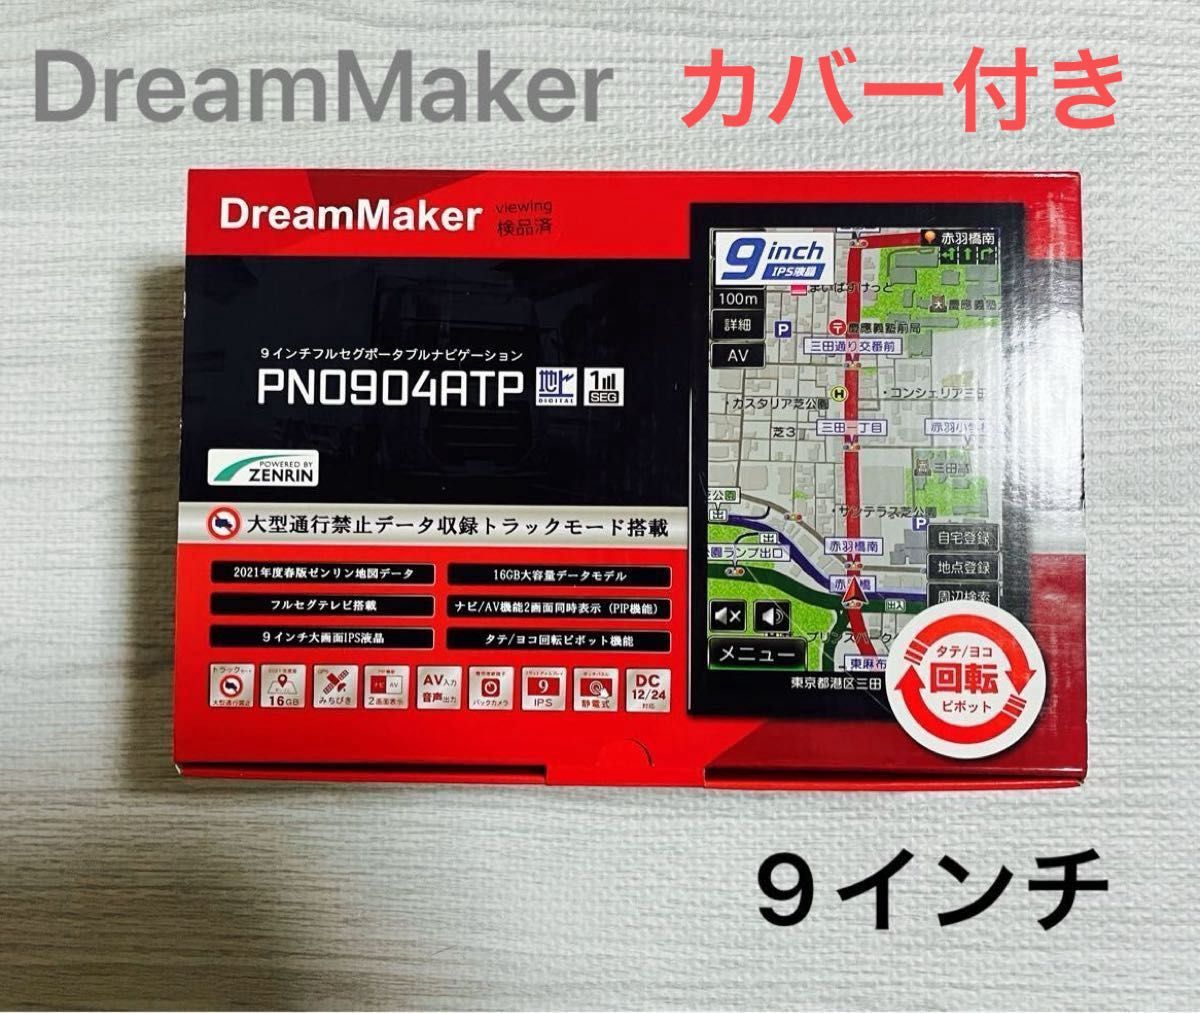 ※DreamMaker 9インチフルセグポータブルナビゲーション※カバー付き